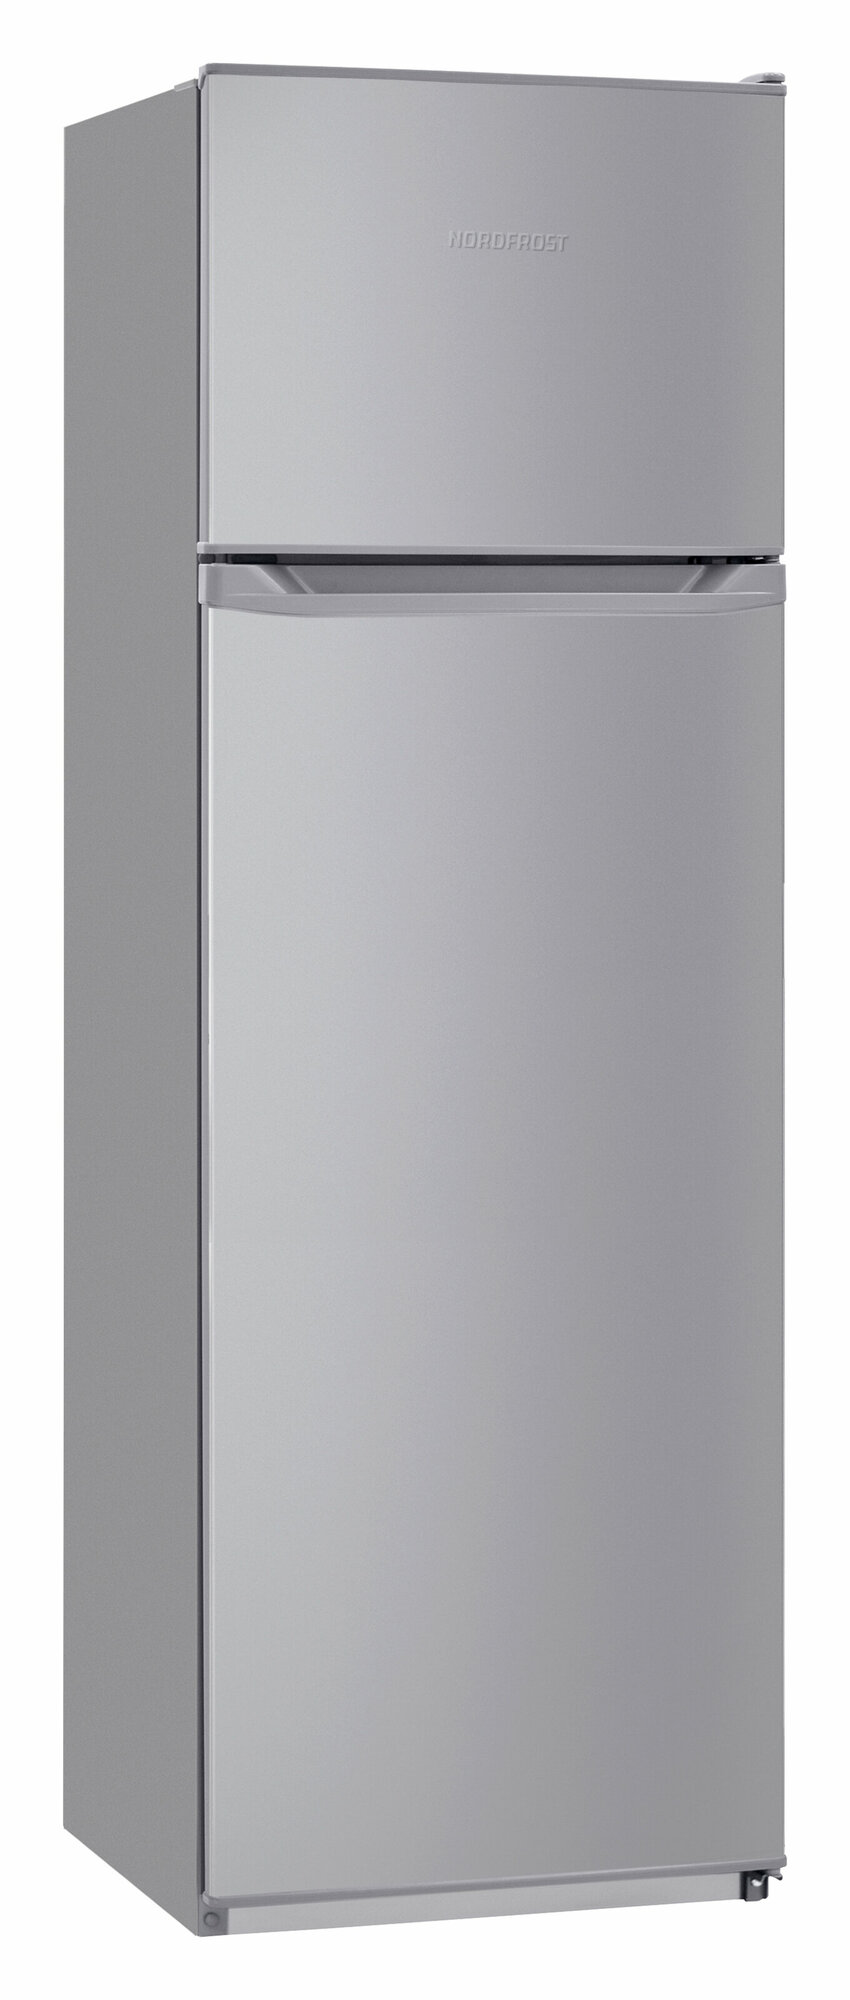 Холодильник NordFrost NRT 144 132 серебристый металлик (двухкамерный) верхняя морозилка .